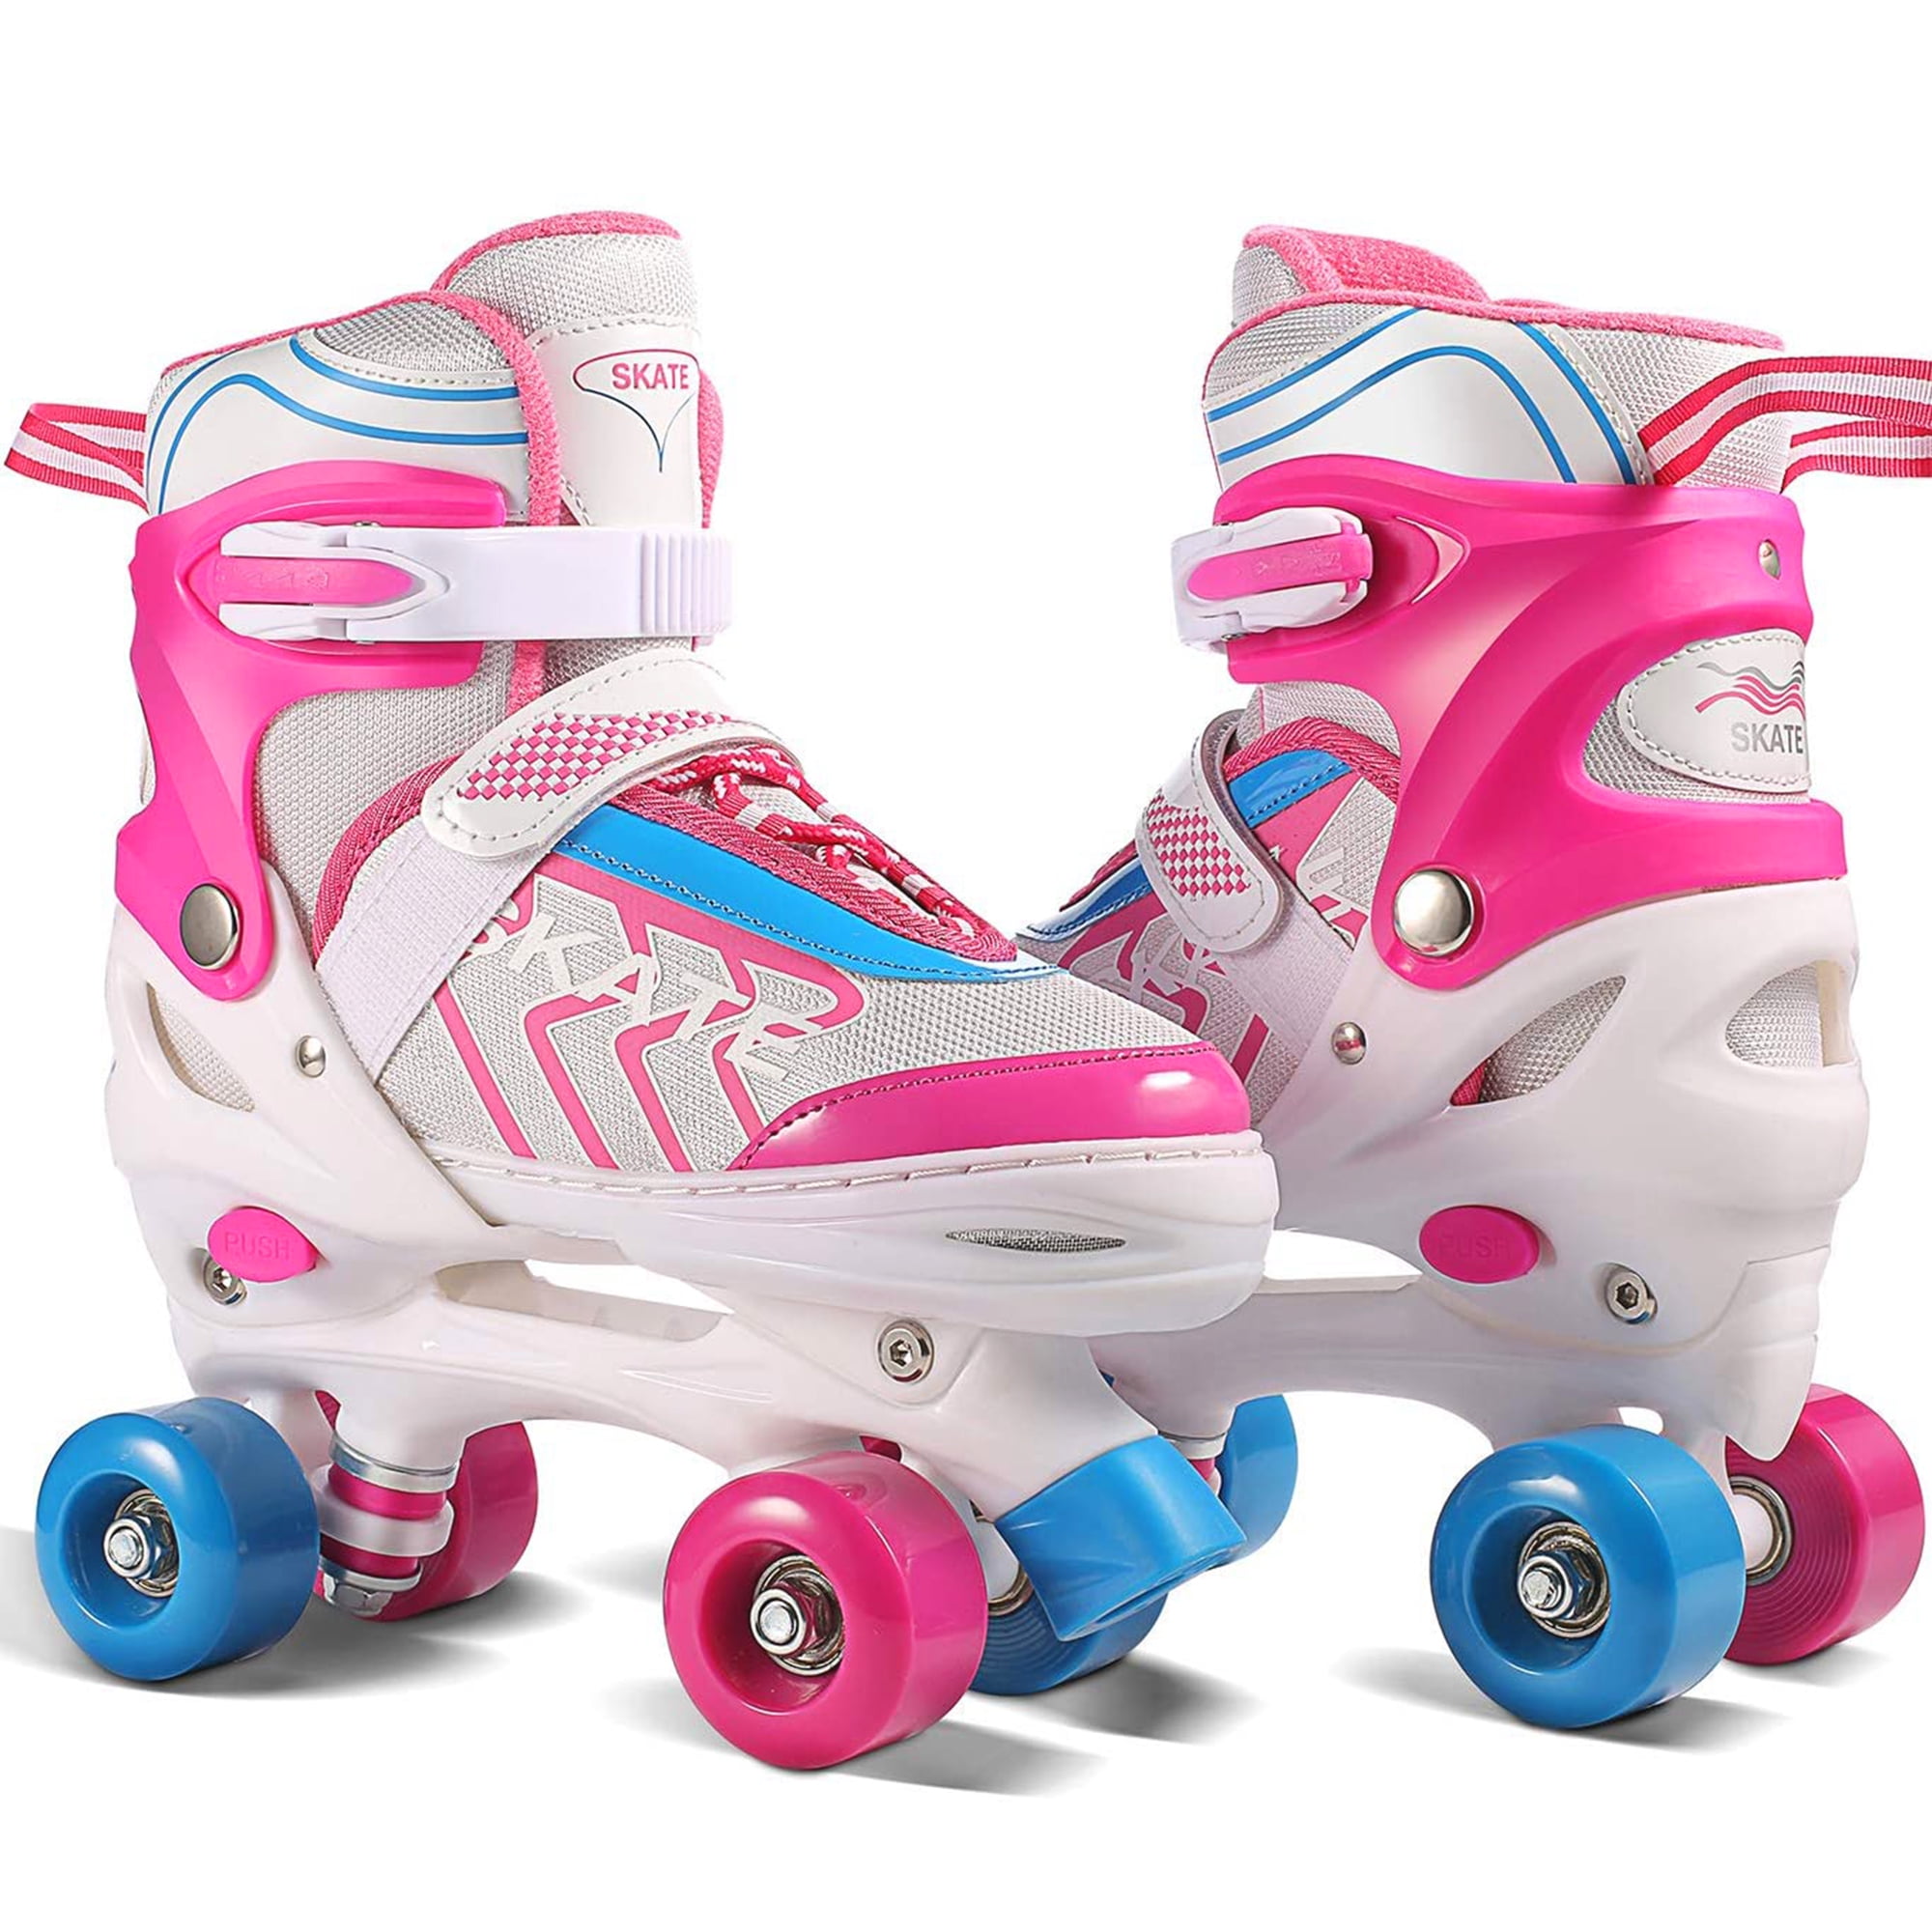 Hikole Roller Skates for Kids Children,Adjustable Light Up Skates for Girls Boys 